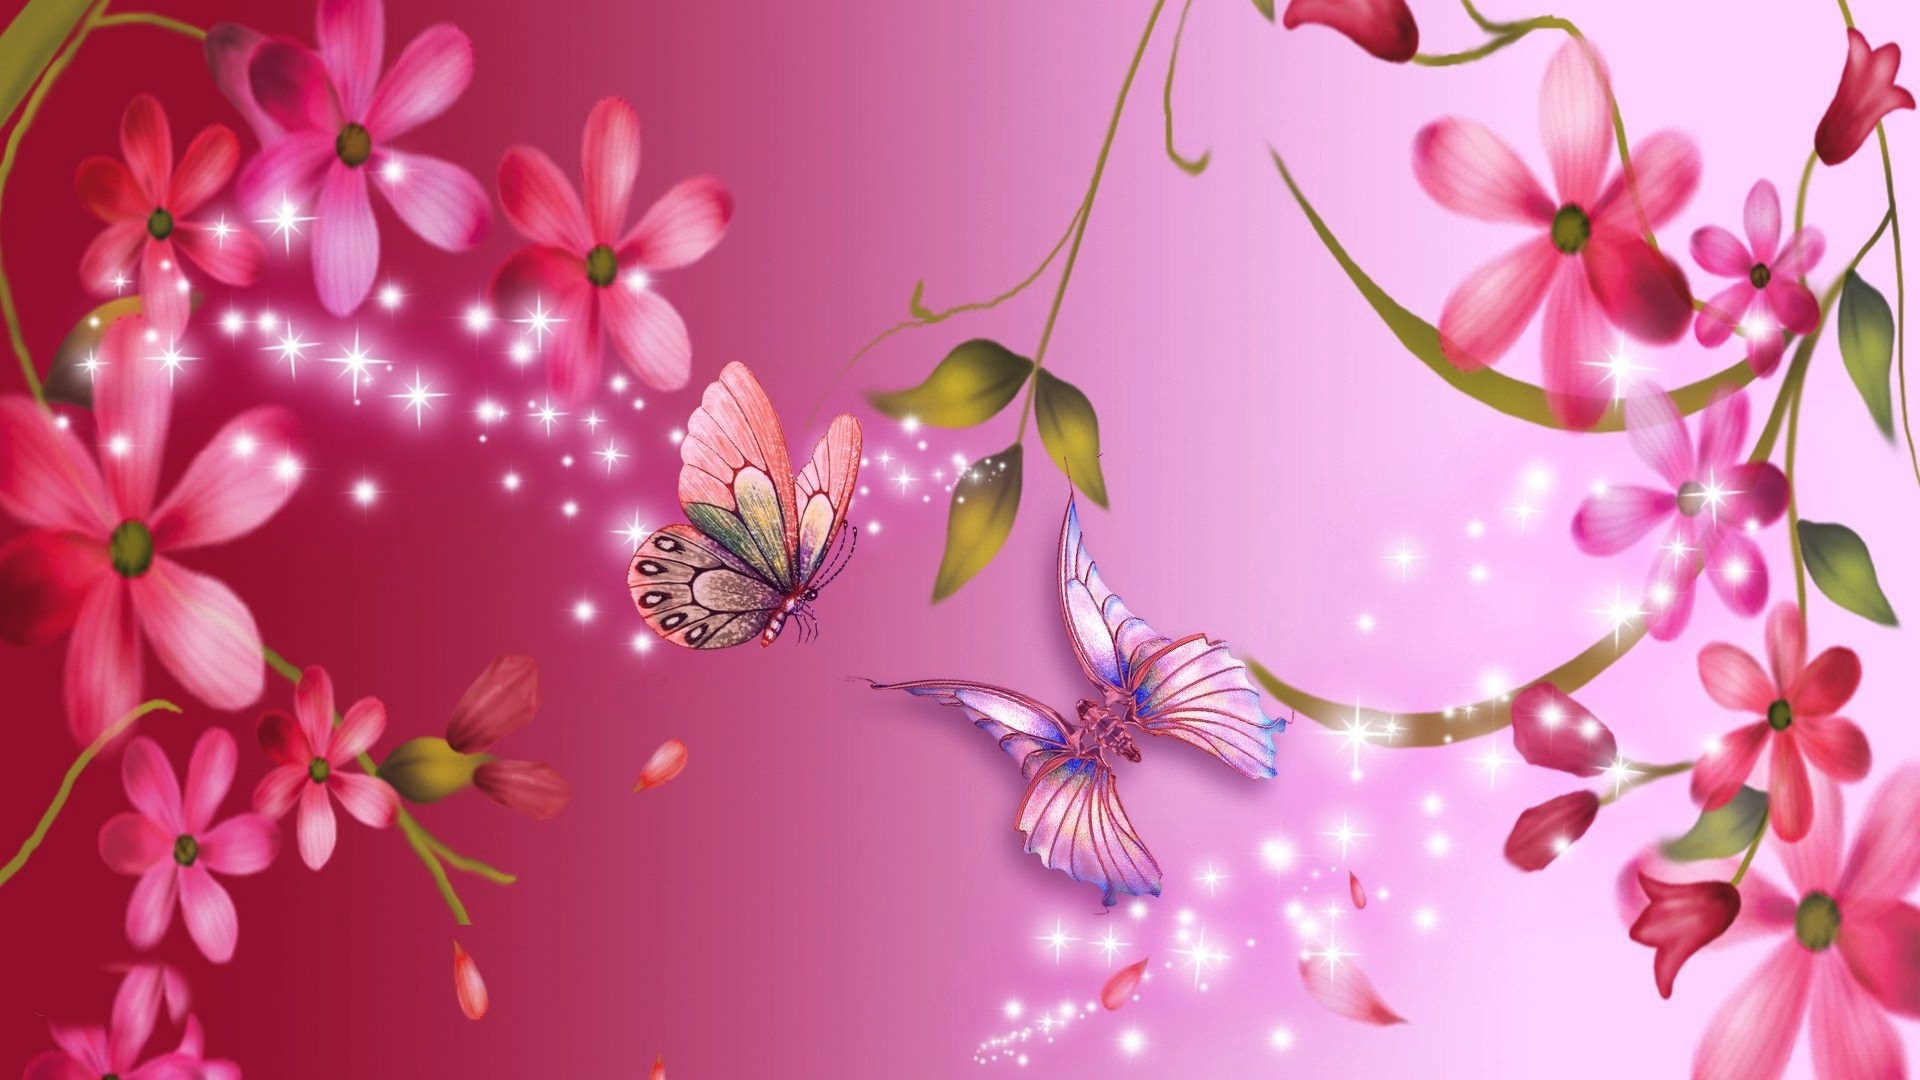 17 Best ideas about Pink Flower Wallpaper on Pinterest ...